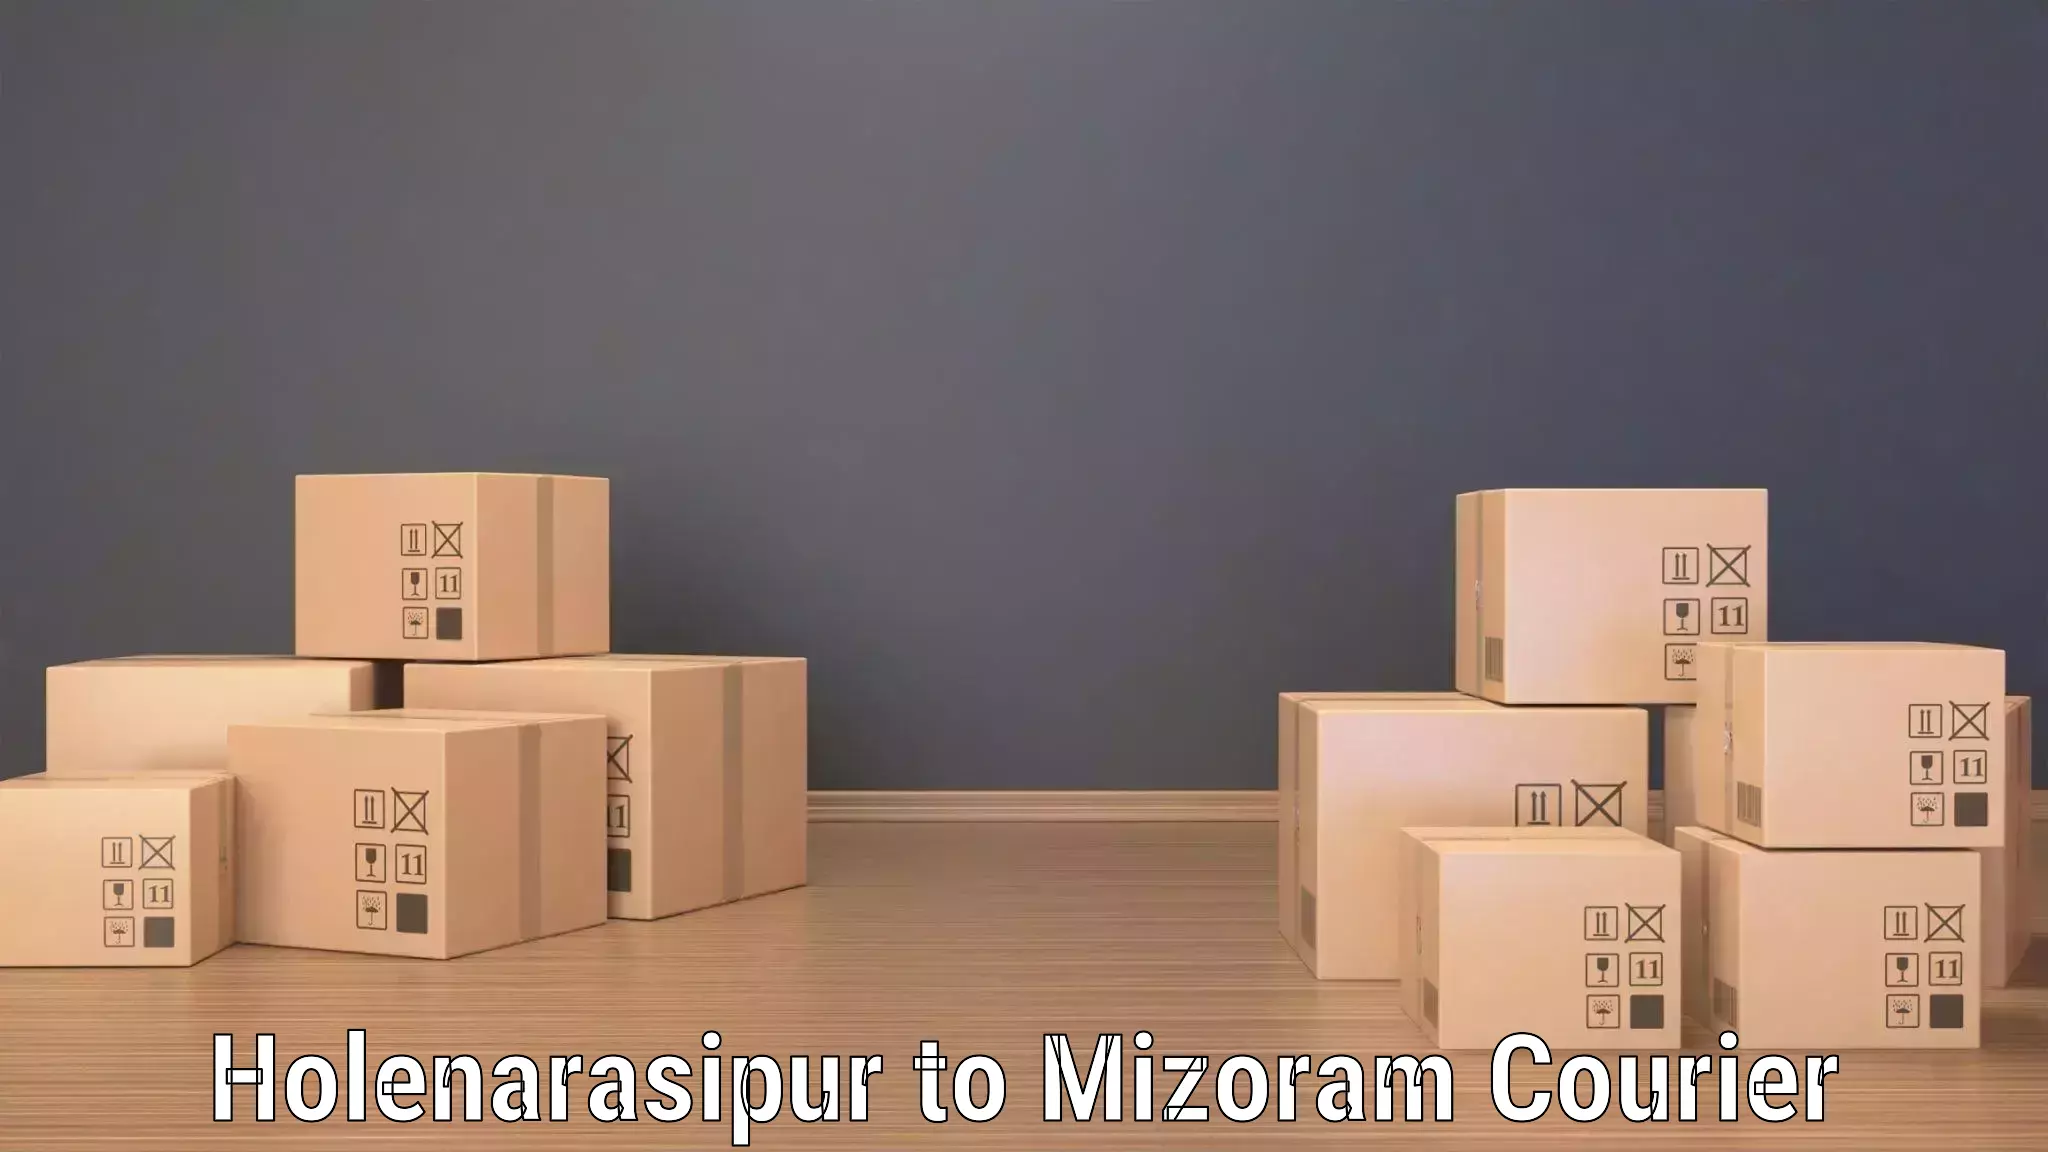 Professional courier handling Holenarasipur to Mizoram